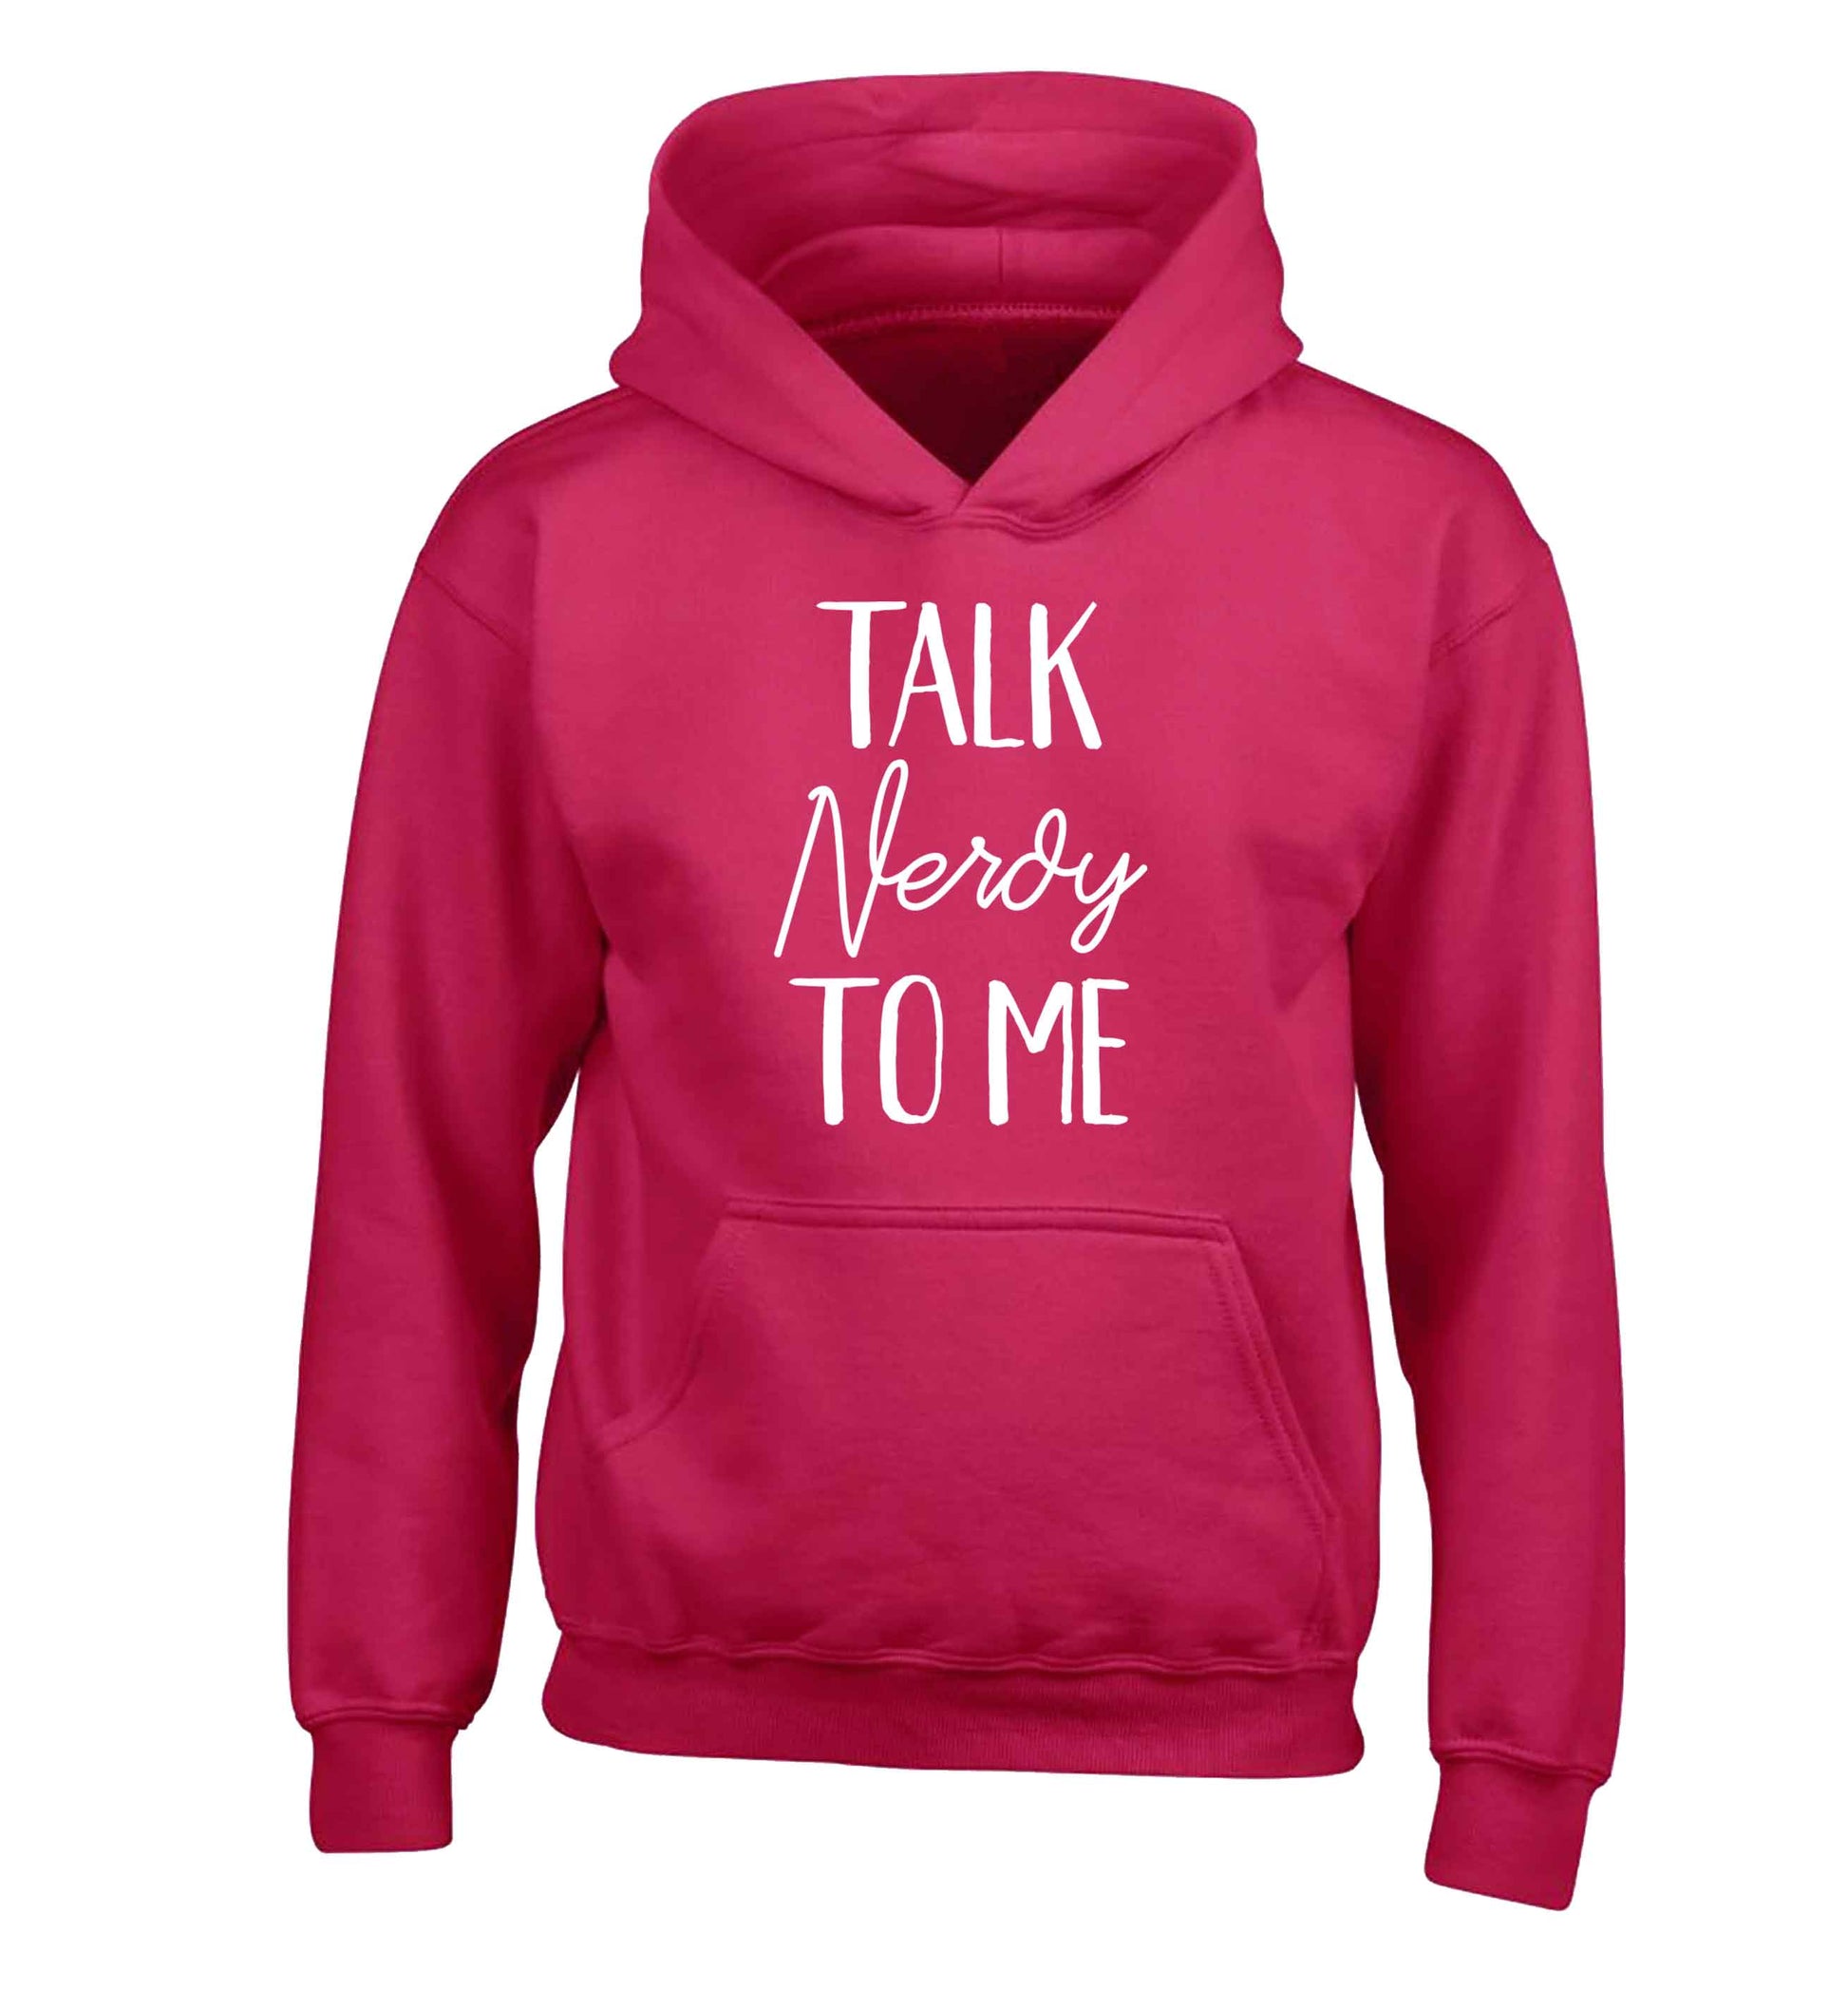 Talk nerdy to me children's pink hoodie 12-13 Years